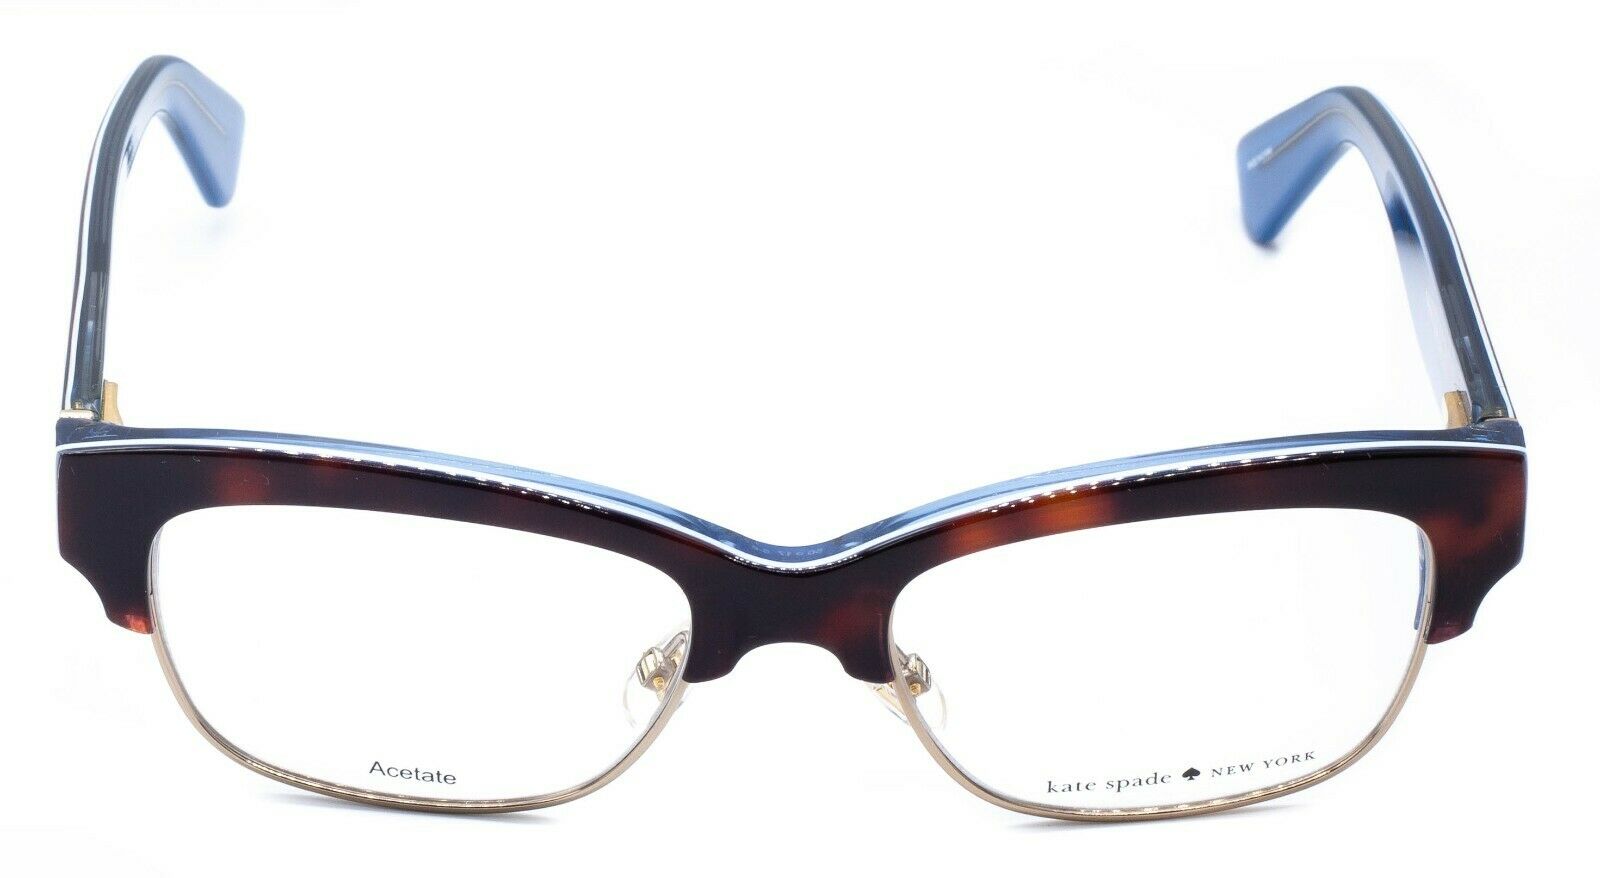 KATE SPADE NEW YORK SHANTAL QTR Havana Blue 50mm Eyewear FRAMES Glasses Optical